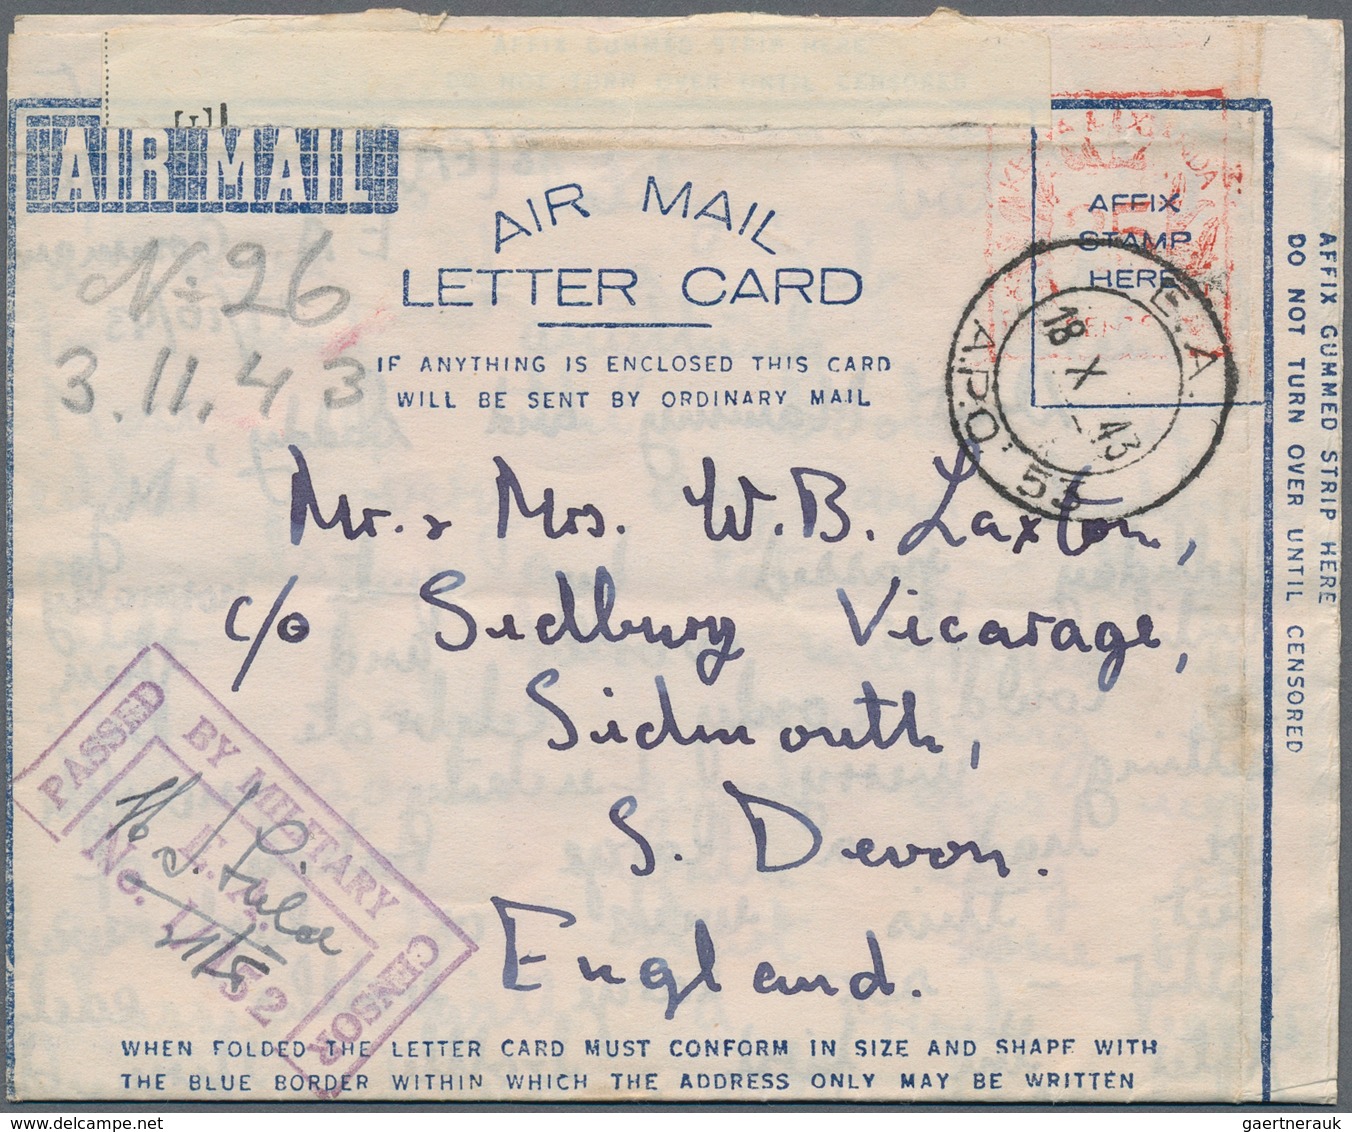 Ostafrikanische Gemeinschaft: 1943/44, Air Mail Letter cards with red value tablet "25 CENTS / N 4",